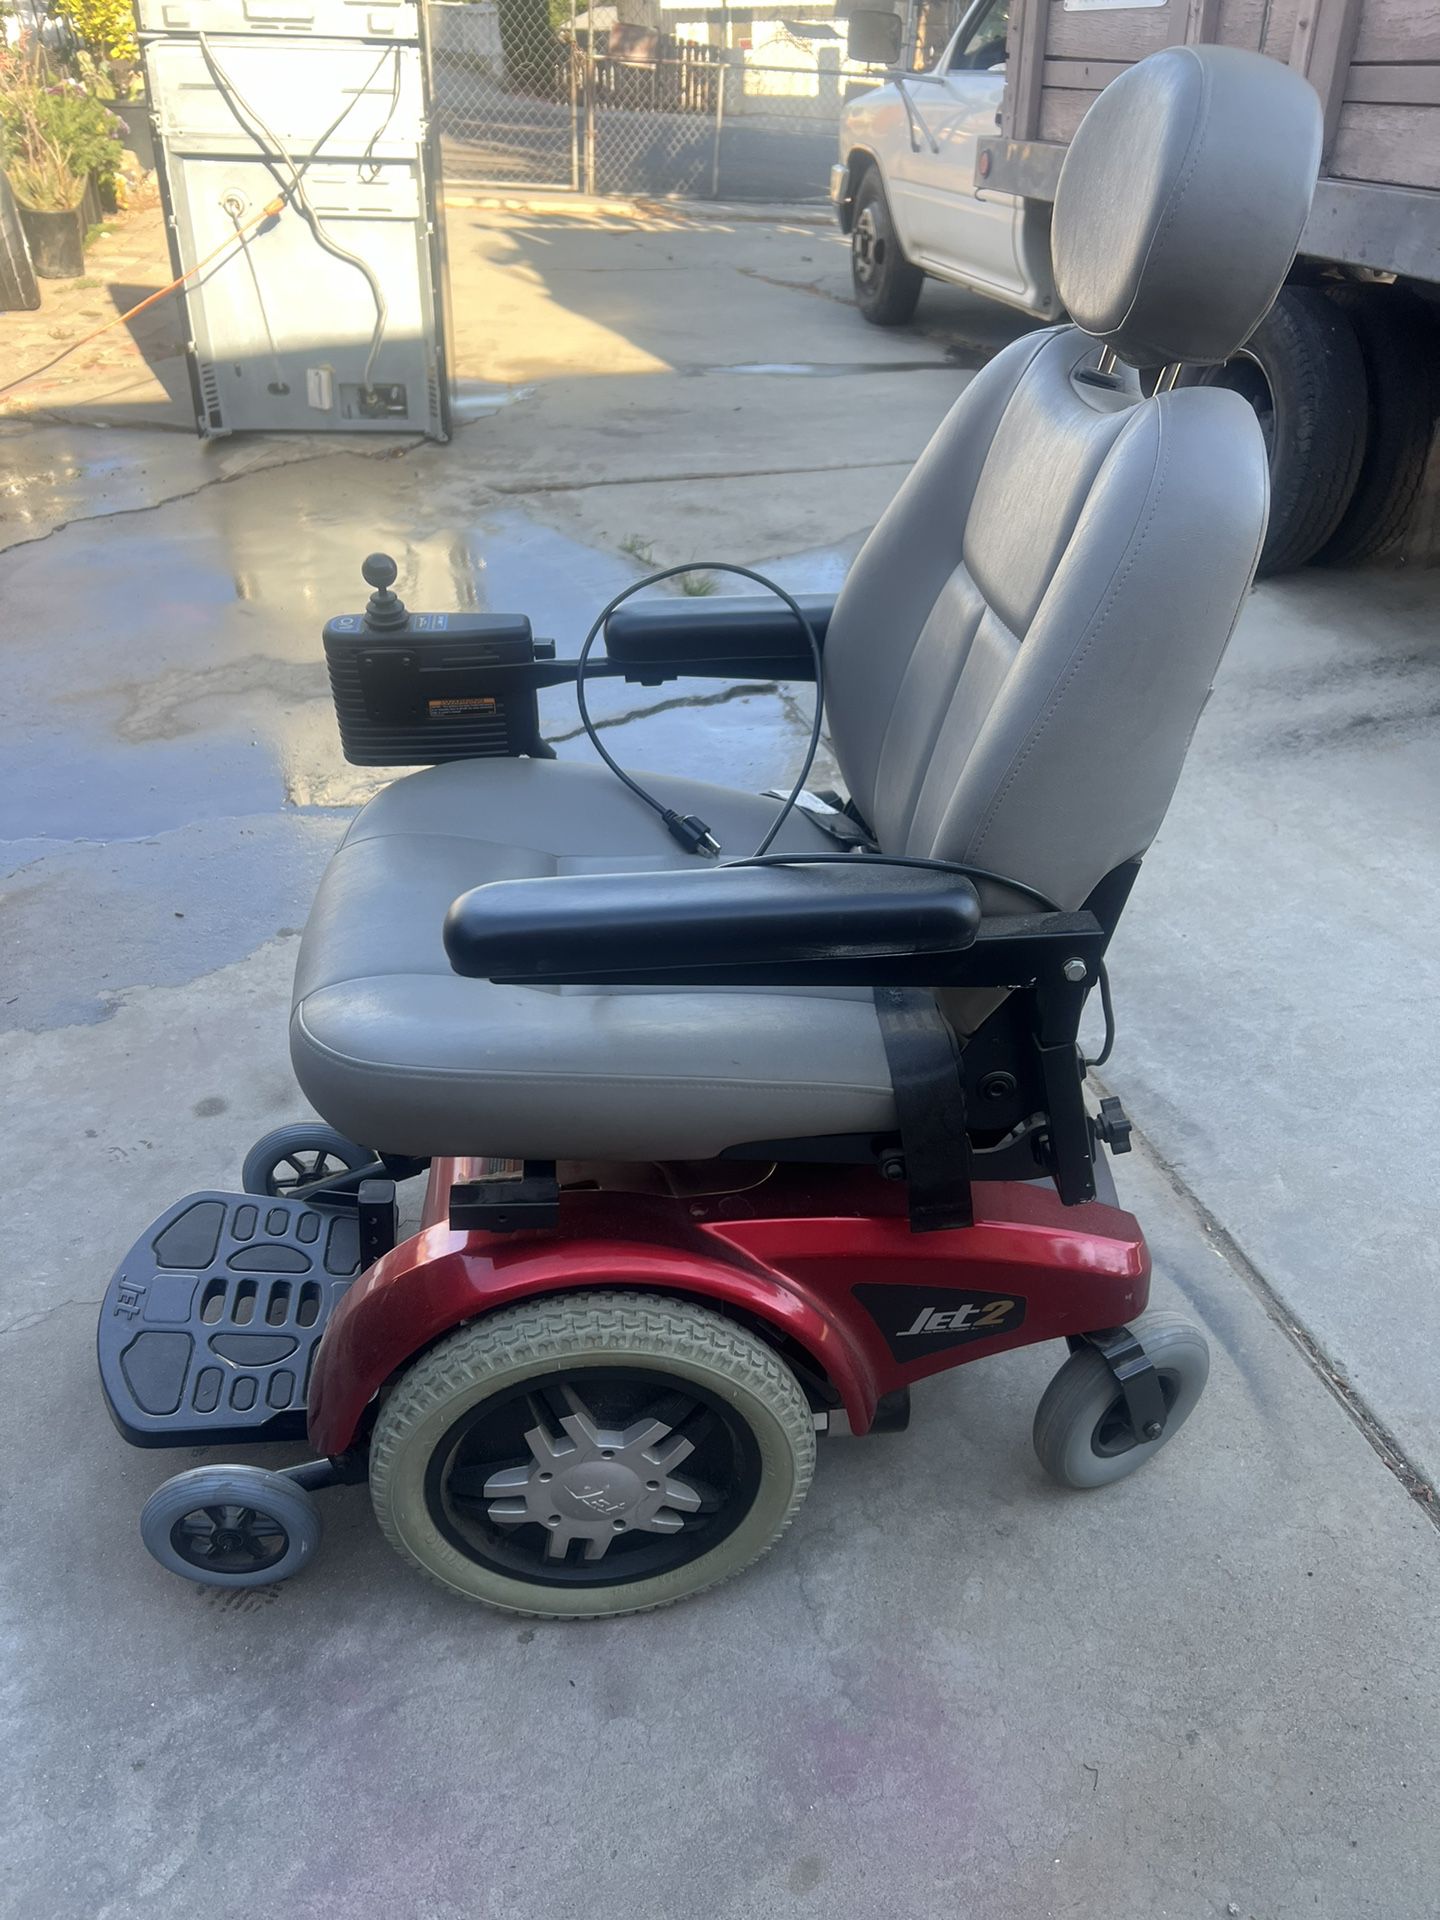 Electric wheelchair 